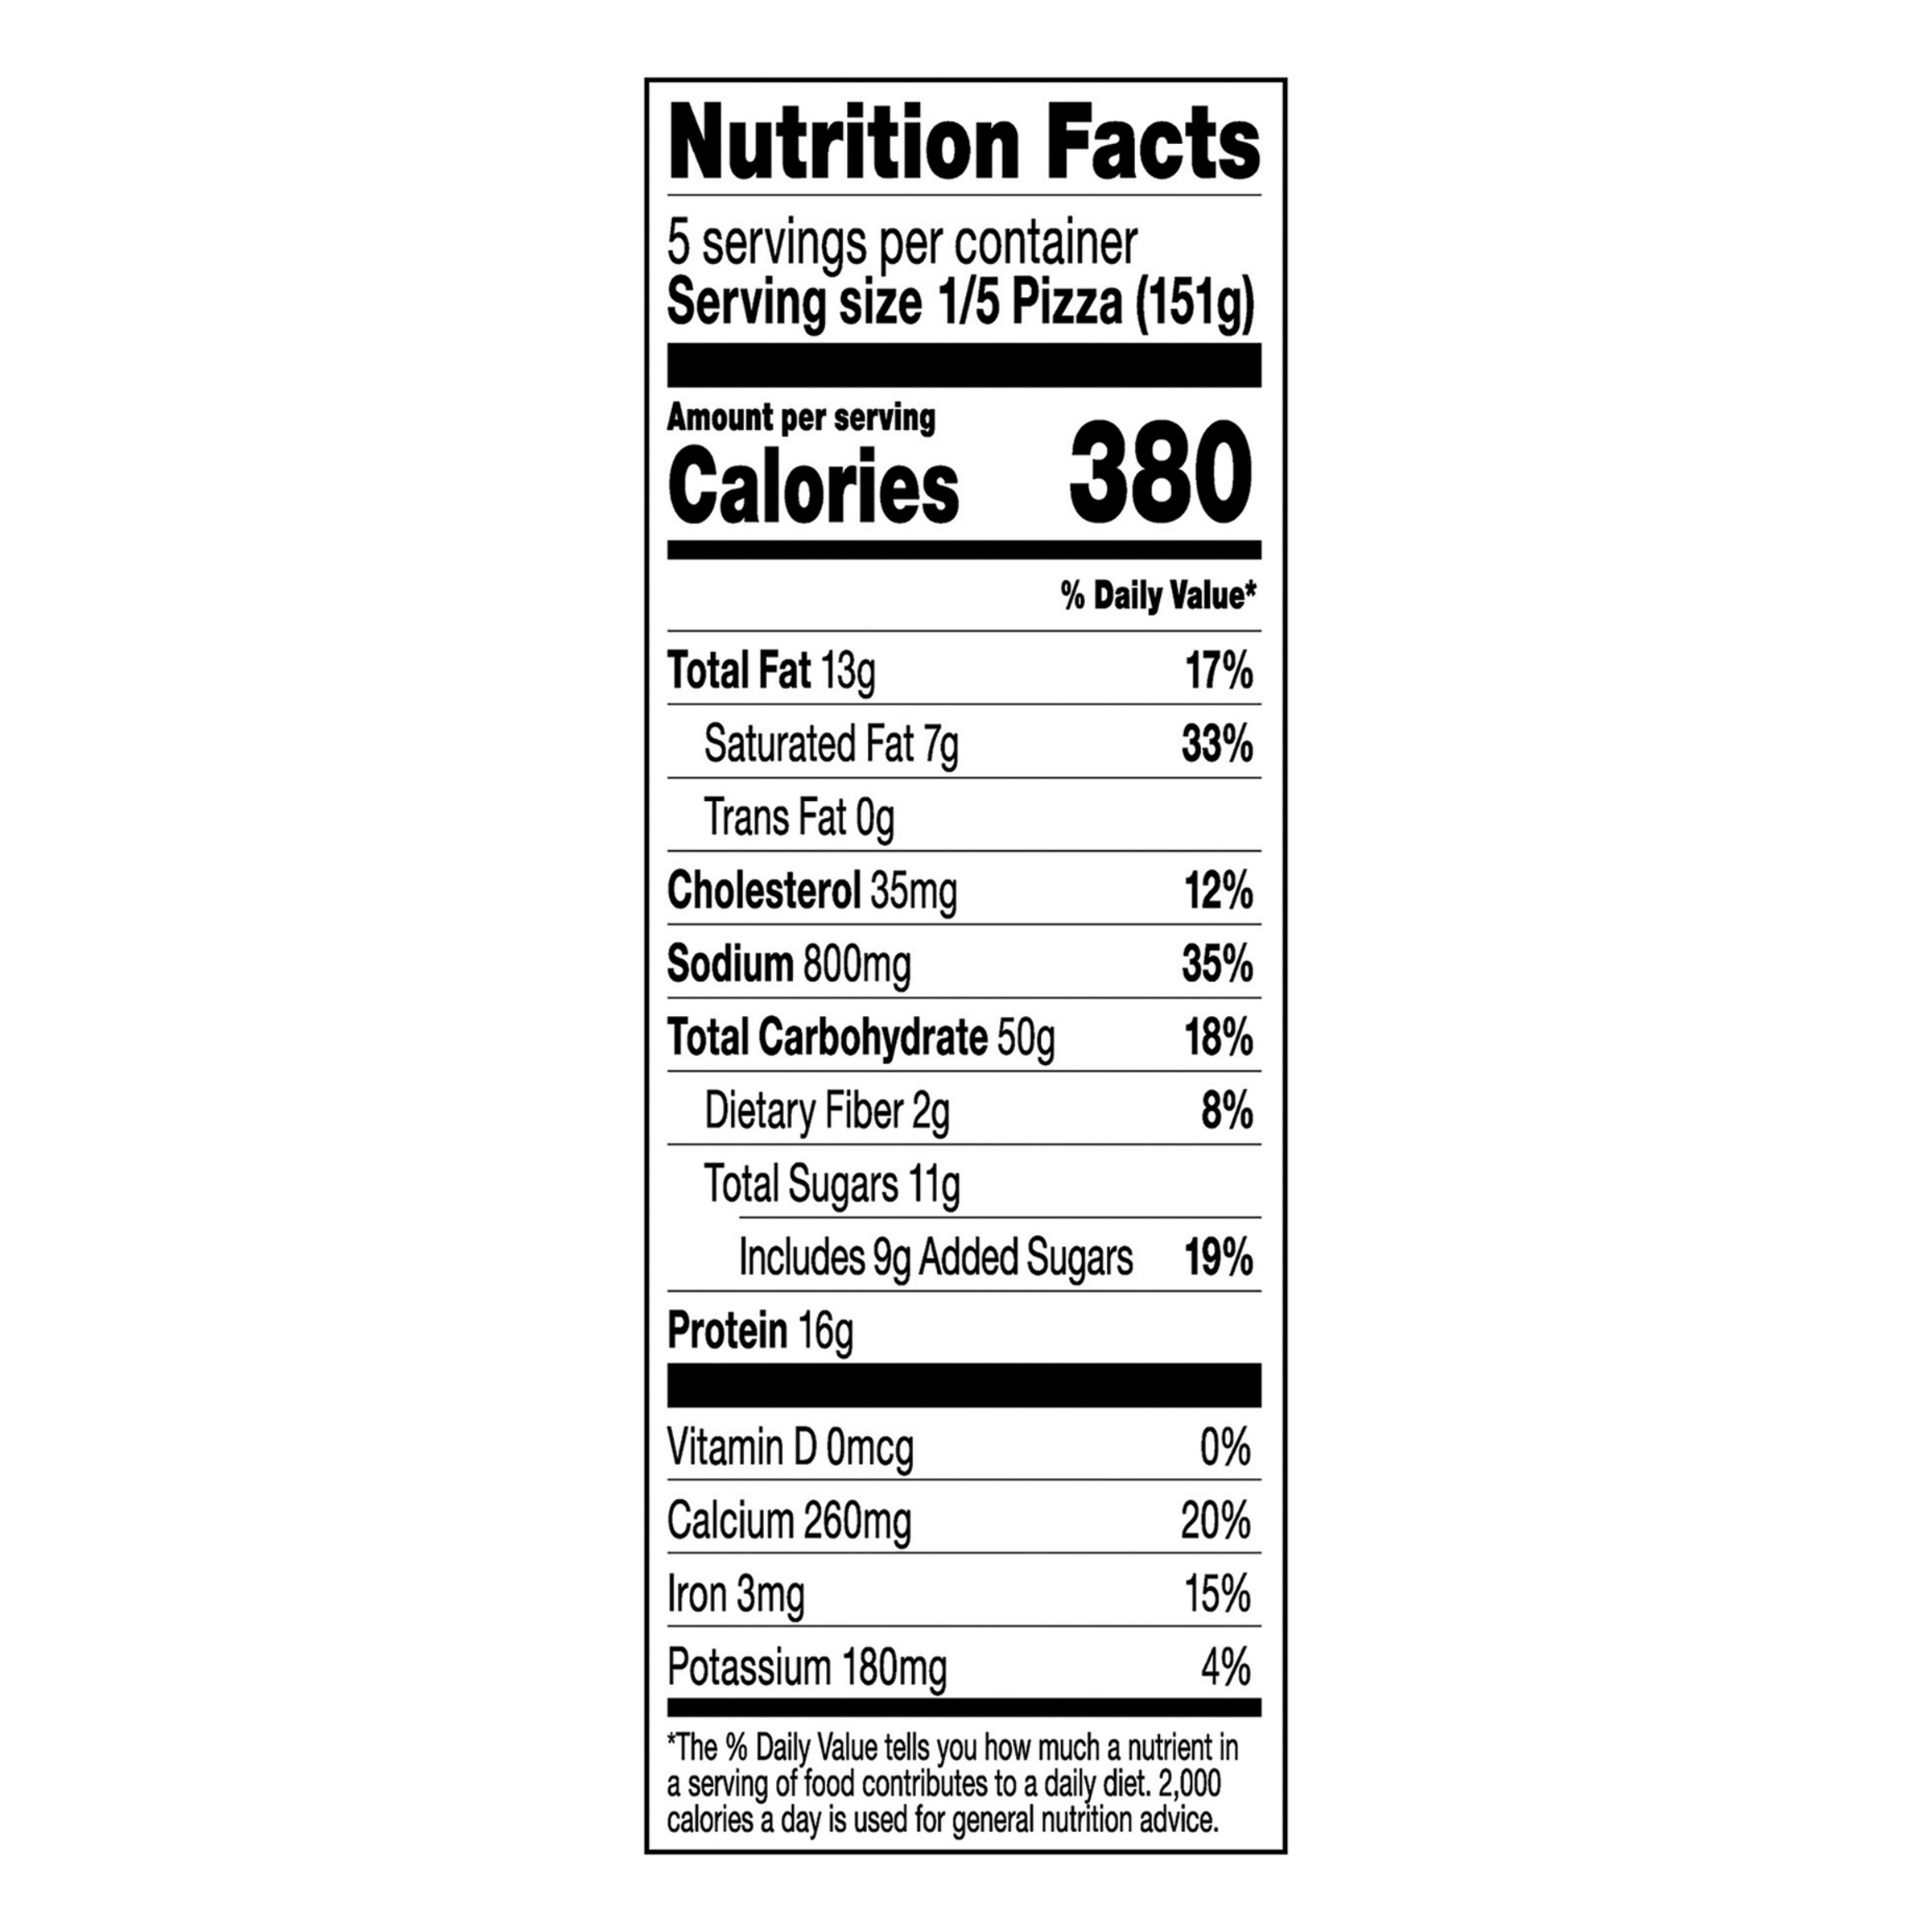 Nutrition Facts Serving Size 1/5 Pizza (151g)
				Servings per container	5
				Calories	 380
				Total Fat 13 g
				% DV 17%
				Saturated Fat 7 g
				% DV 33%
				Trans Fat 0 g
				Cholesterol 35 mg
				% DV 12%
				Sodium 800 mg
				% DV 35%
				Total Carbohydrate 50 g
				% DV 18%
				Dietary Fiber 2 g
				% DV 8%
				Total Sugars 11 g
				Added Sugars 9 g
				% DV 19%
				Protein	16 g
				Vitamin D 0 MCG
				% DV 0%
				Calcium	 260 mg
				% DV 20%
				Iron 3 mg
				% DV 15%
				Potassium 180 mg
				% DV 4%
				